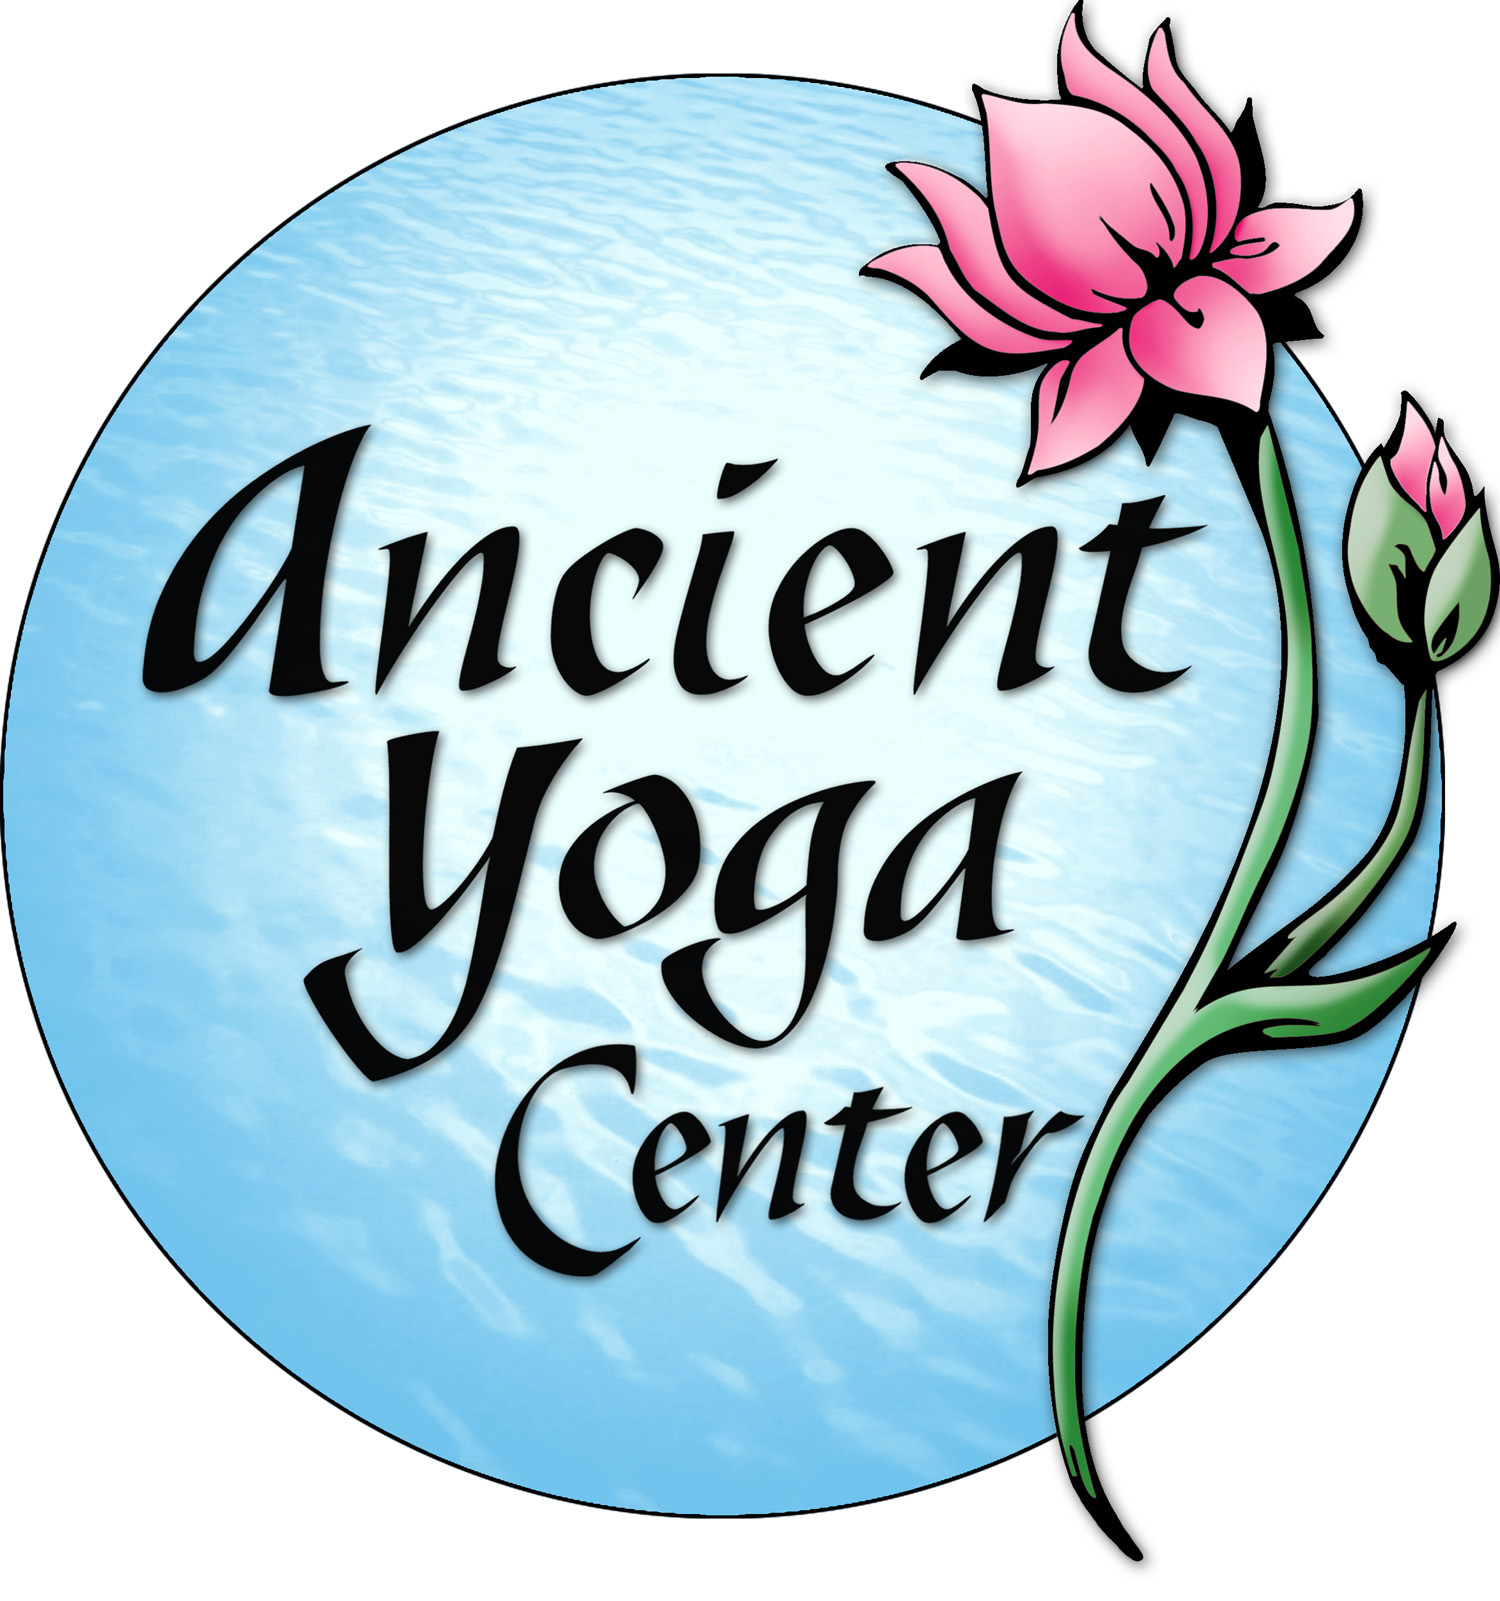 Ancient Yoga Center